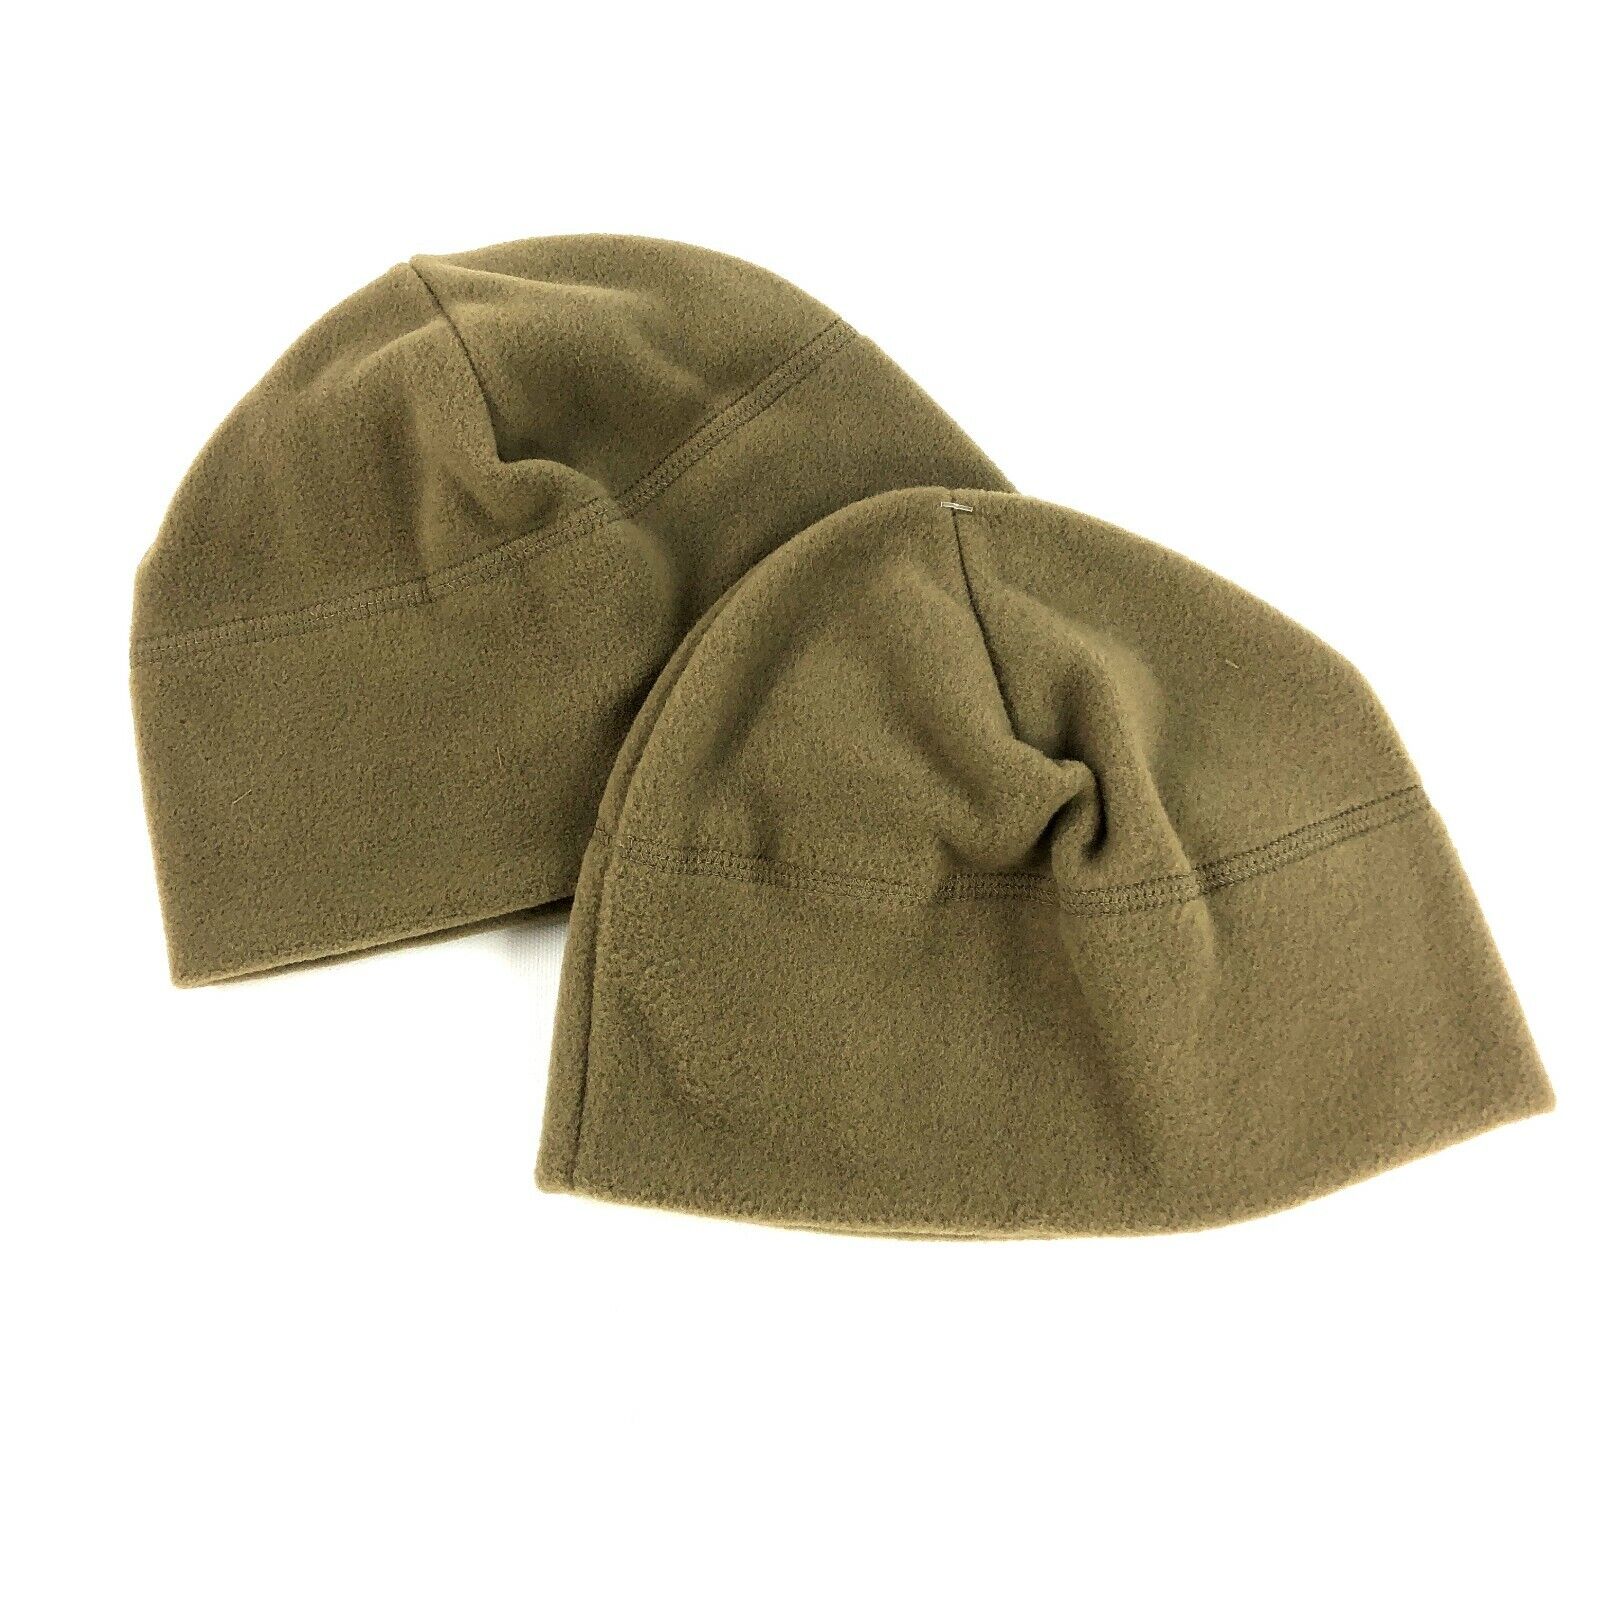 2 Polartec Micro Fleece Cap Coyote Brown Lightweight Military Winter Beanie Hat